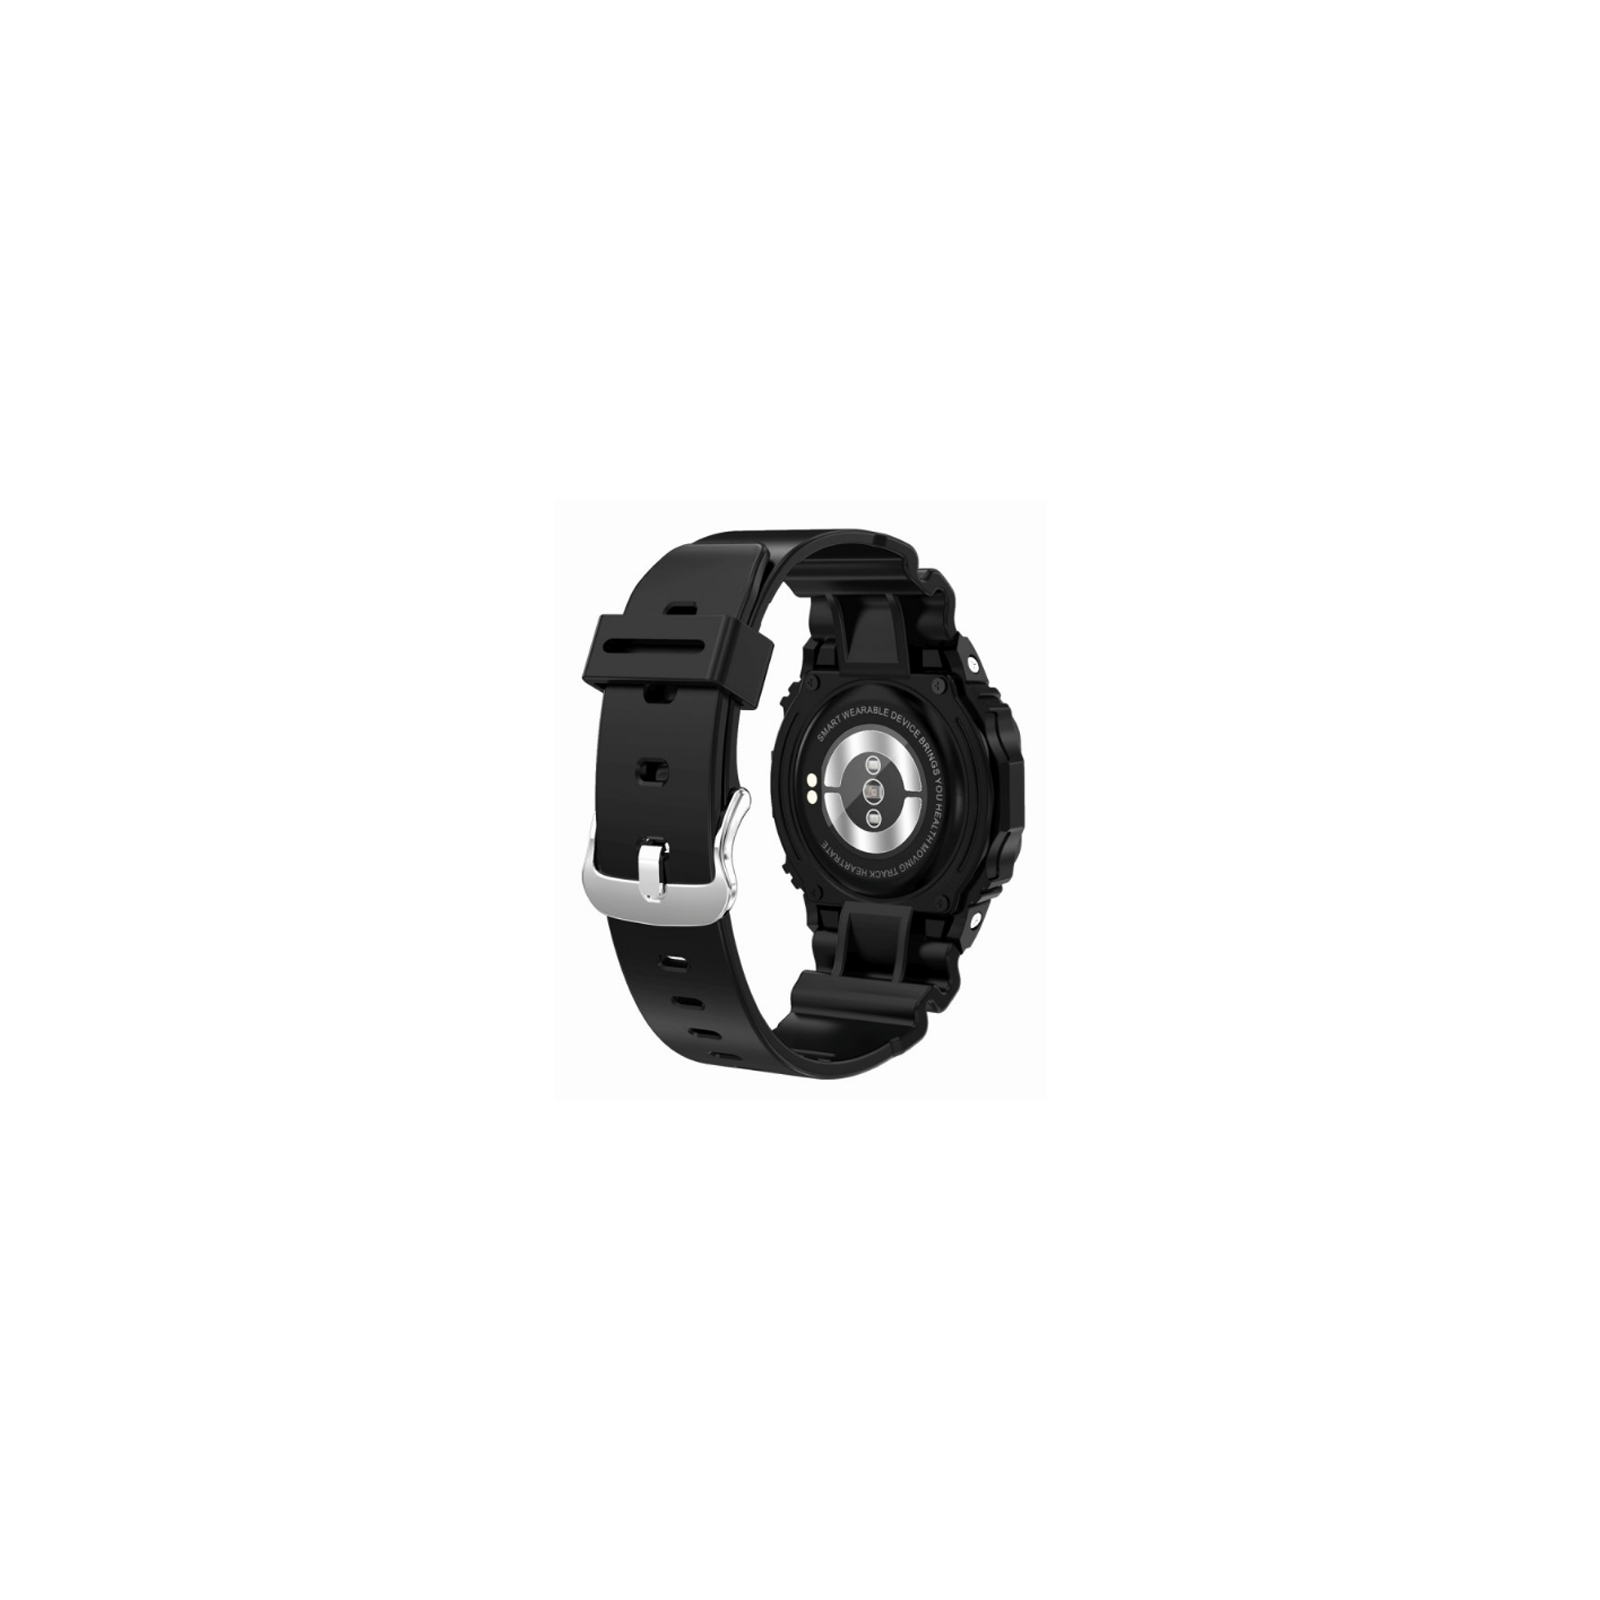 Смарт-годинник Maxcom Fit FW22 CLASSIC Black зображення 3